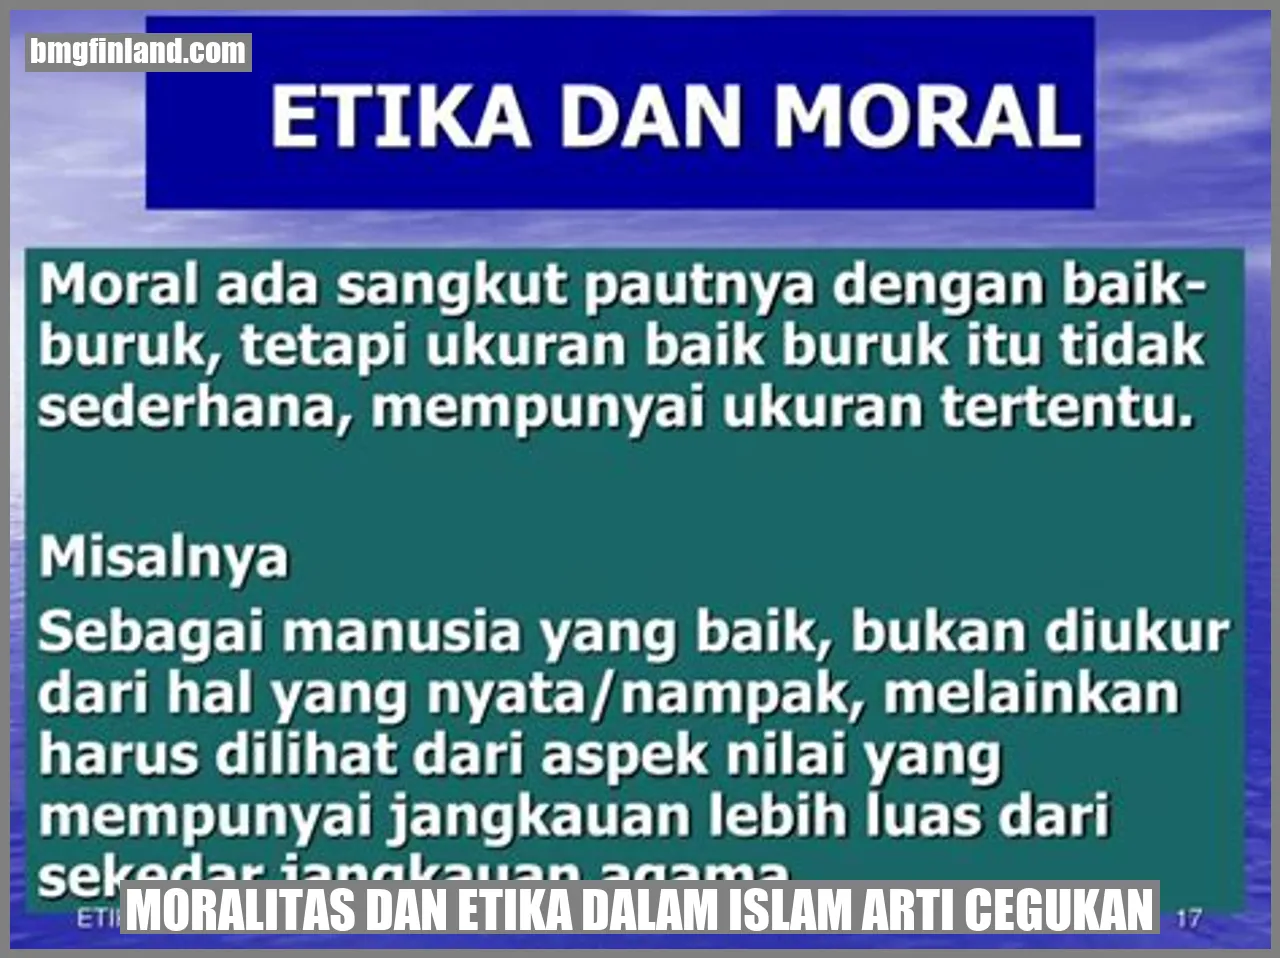 Gambar: Moralitas dan Etika dalam Islam arti cegukan